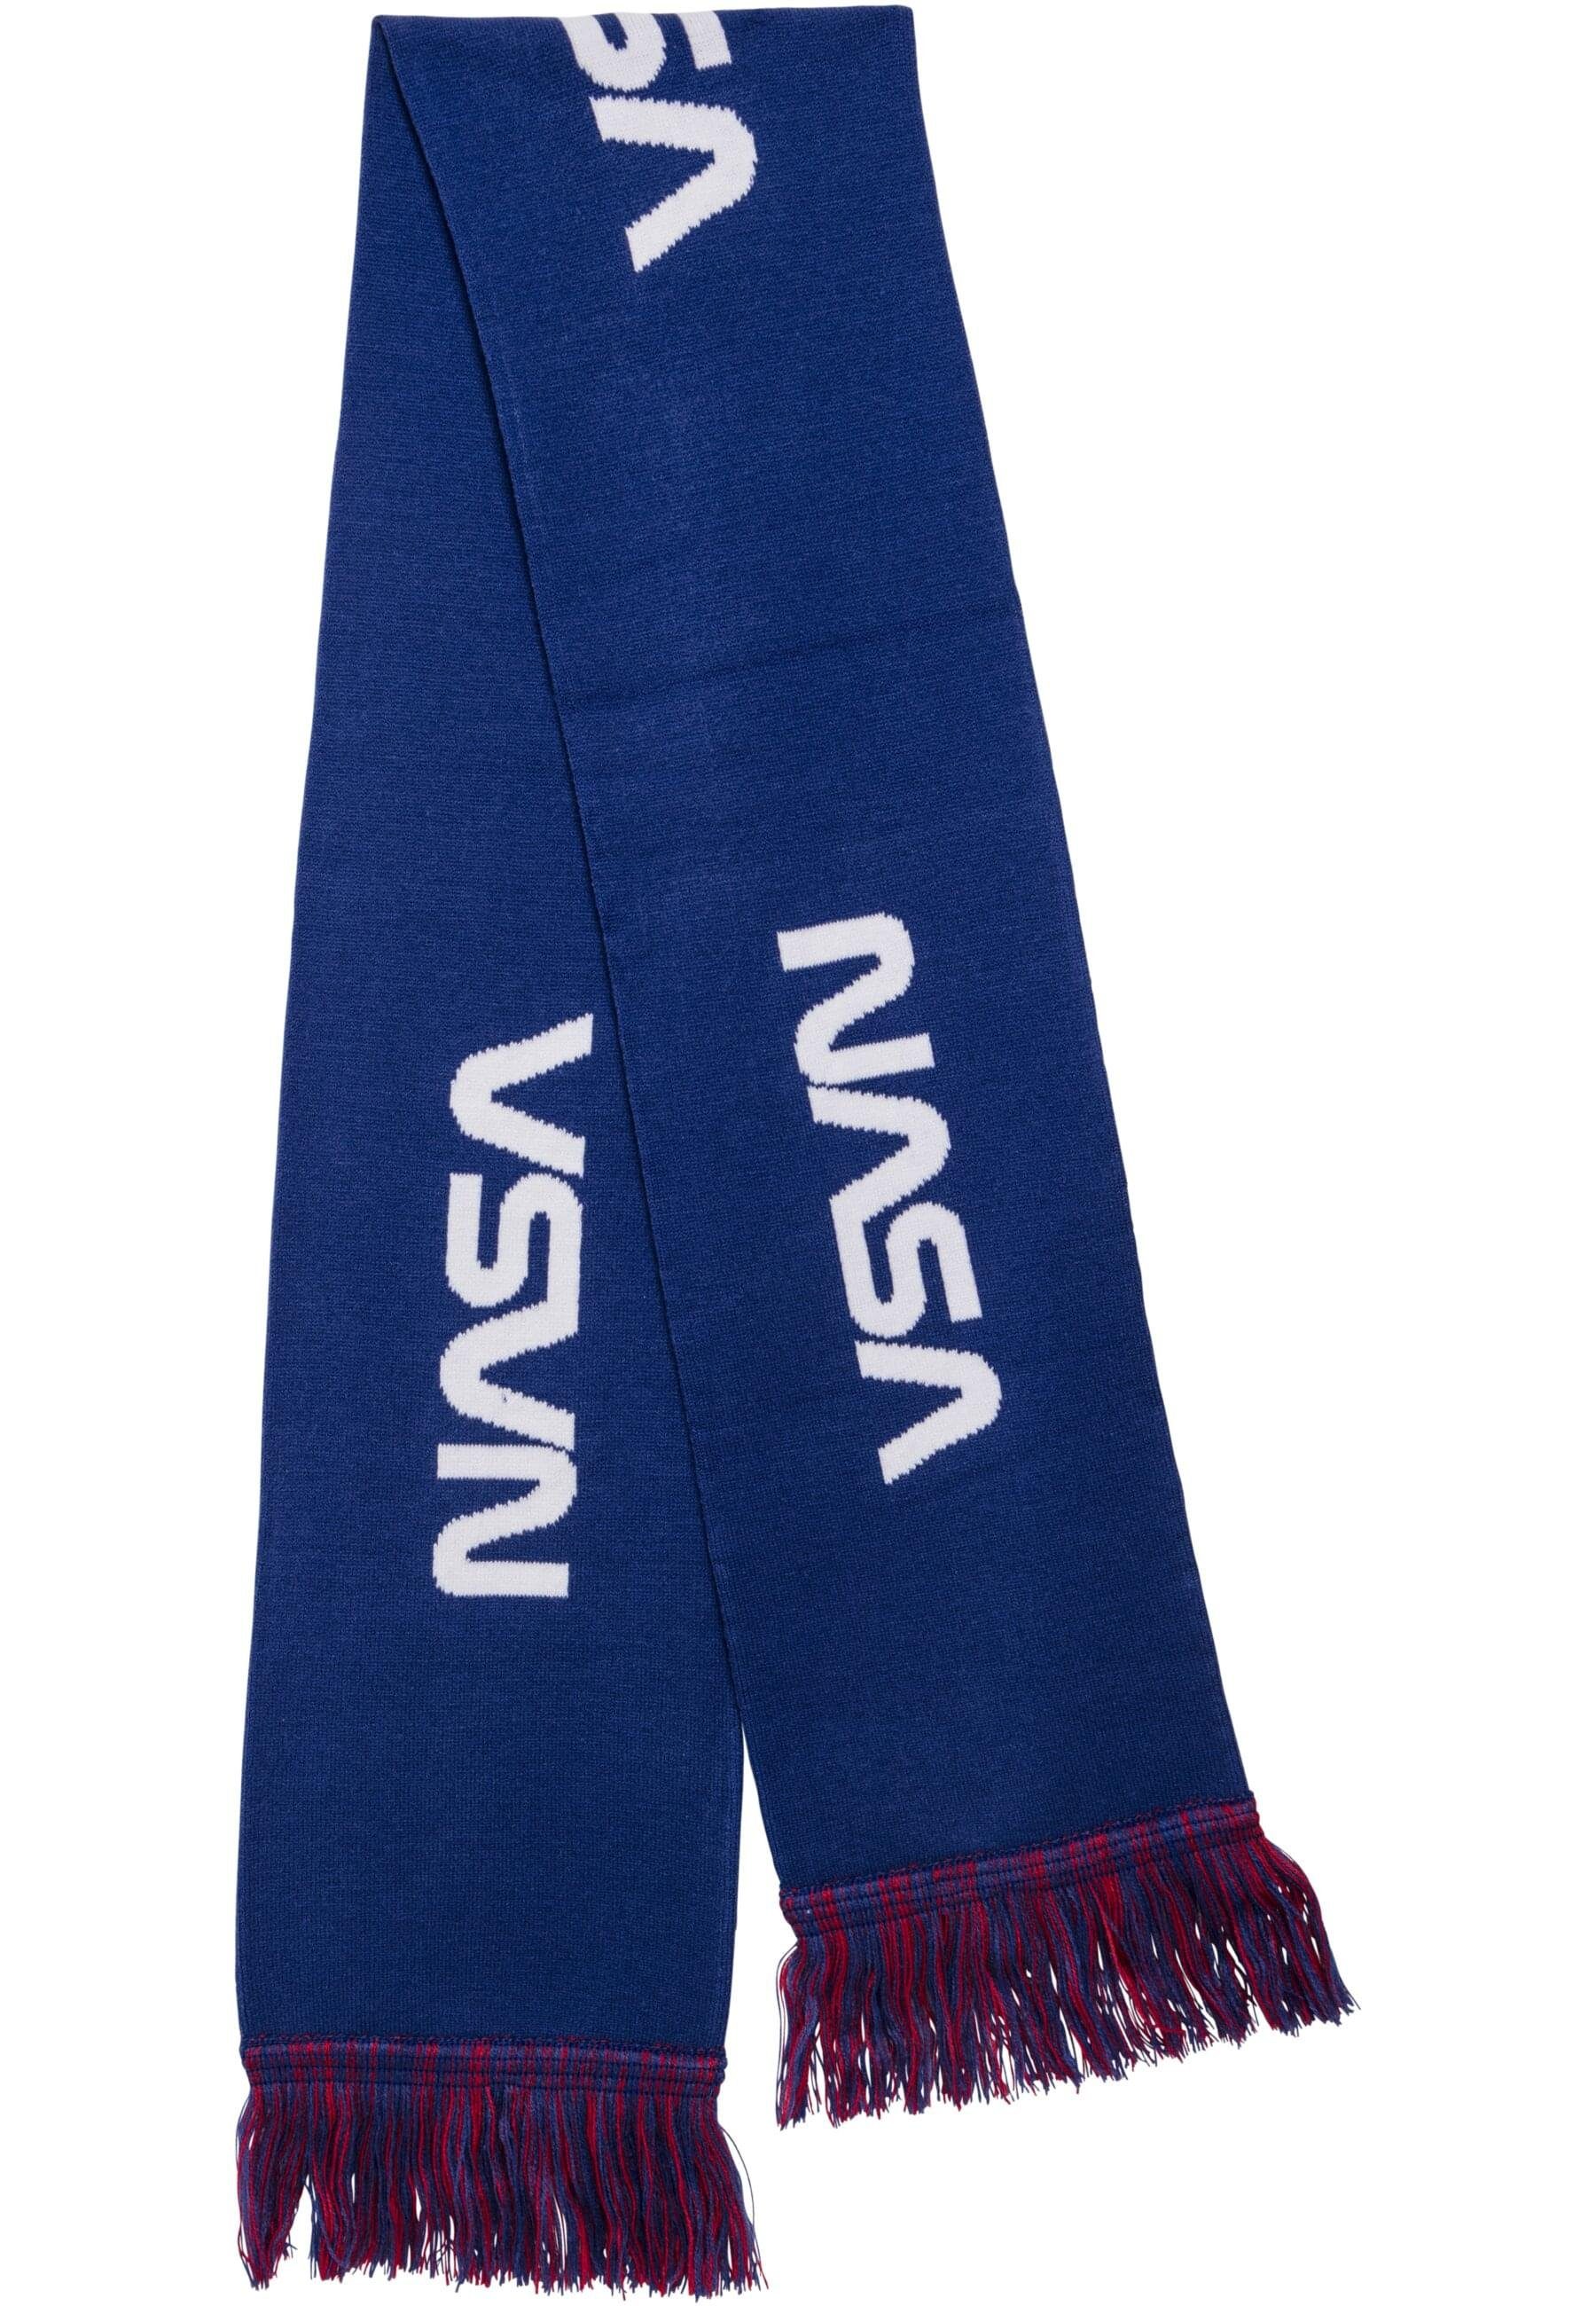 NASA Scarf Schal blue/red/white MisterTee Unisex (1-St) Knitted,